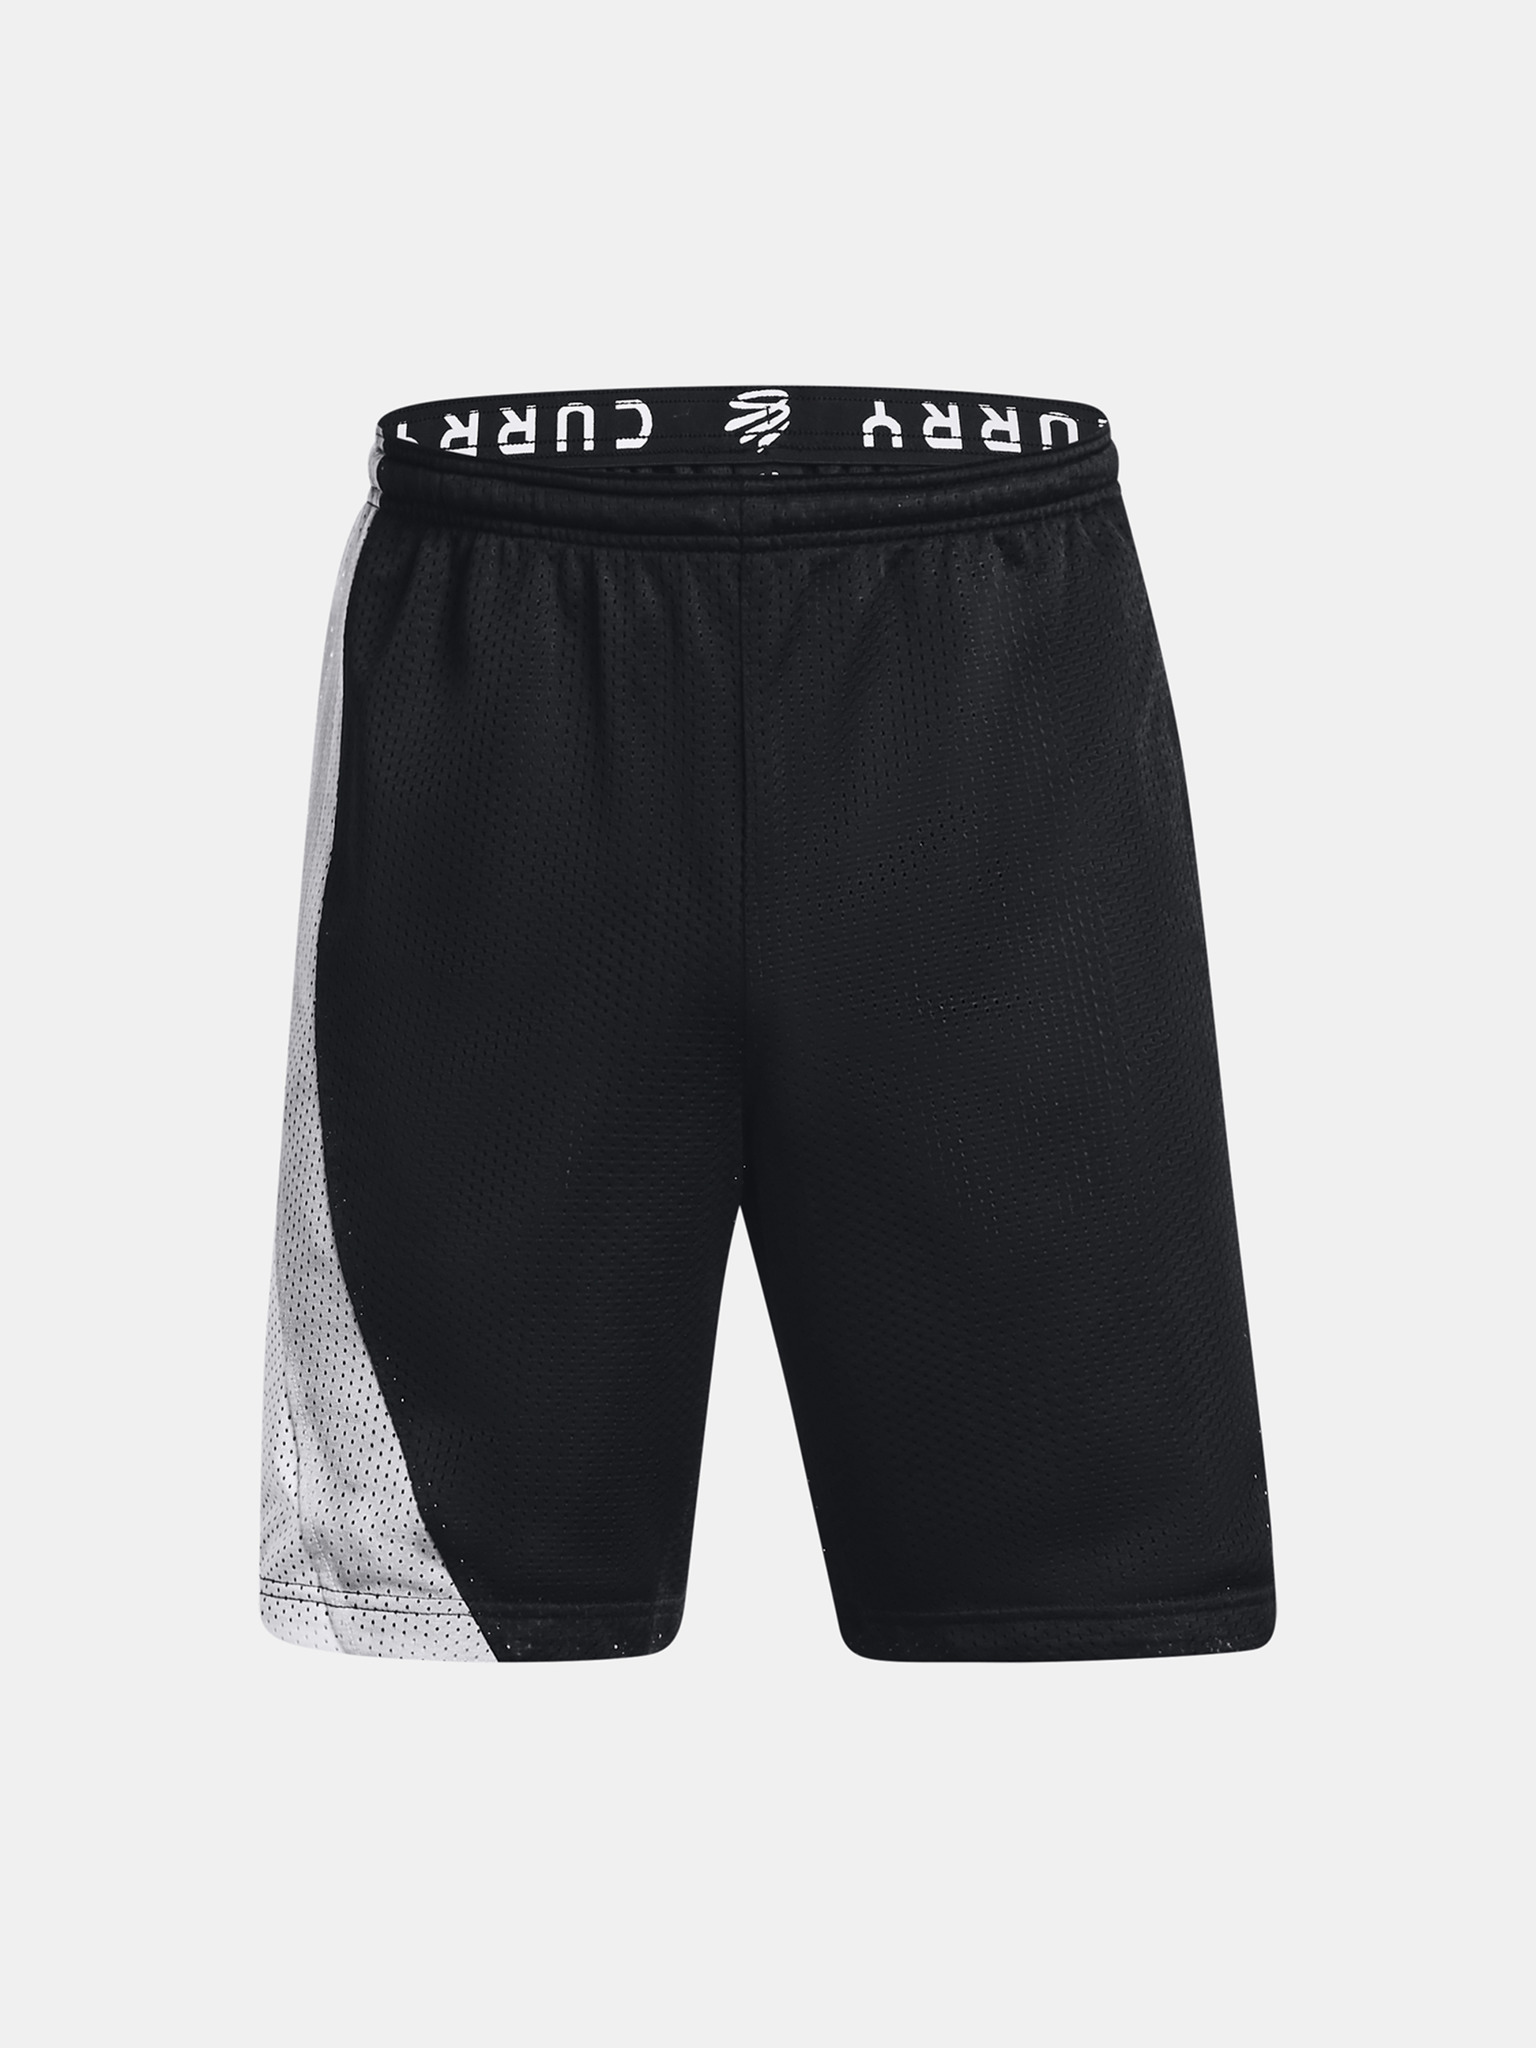 Under Armour Men's Curry Splash Shorts, Small, Black/Neo Turq